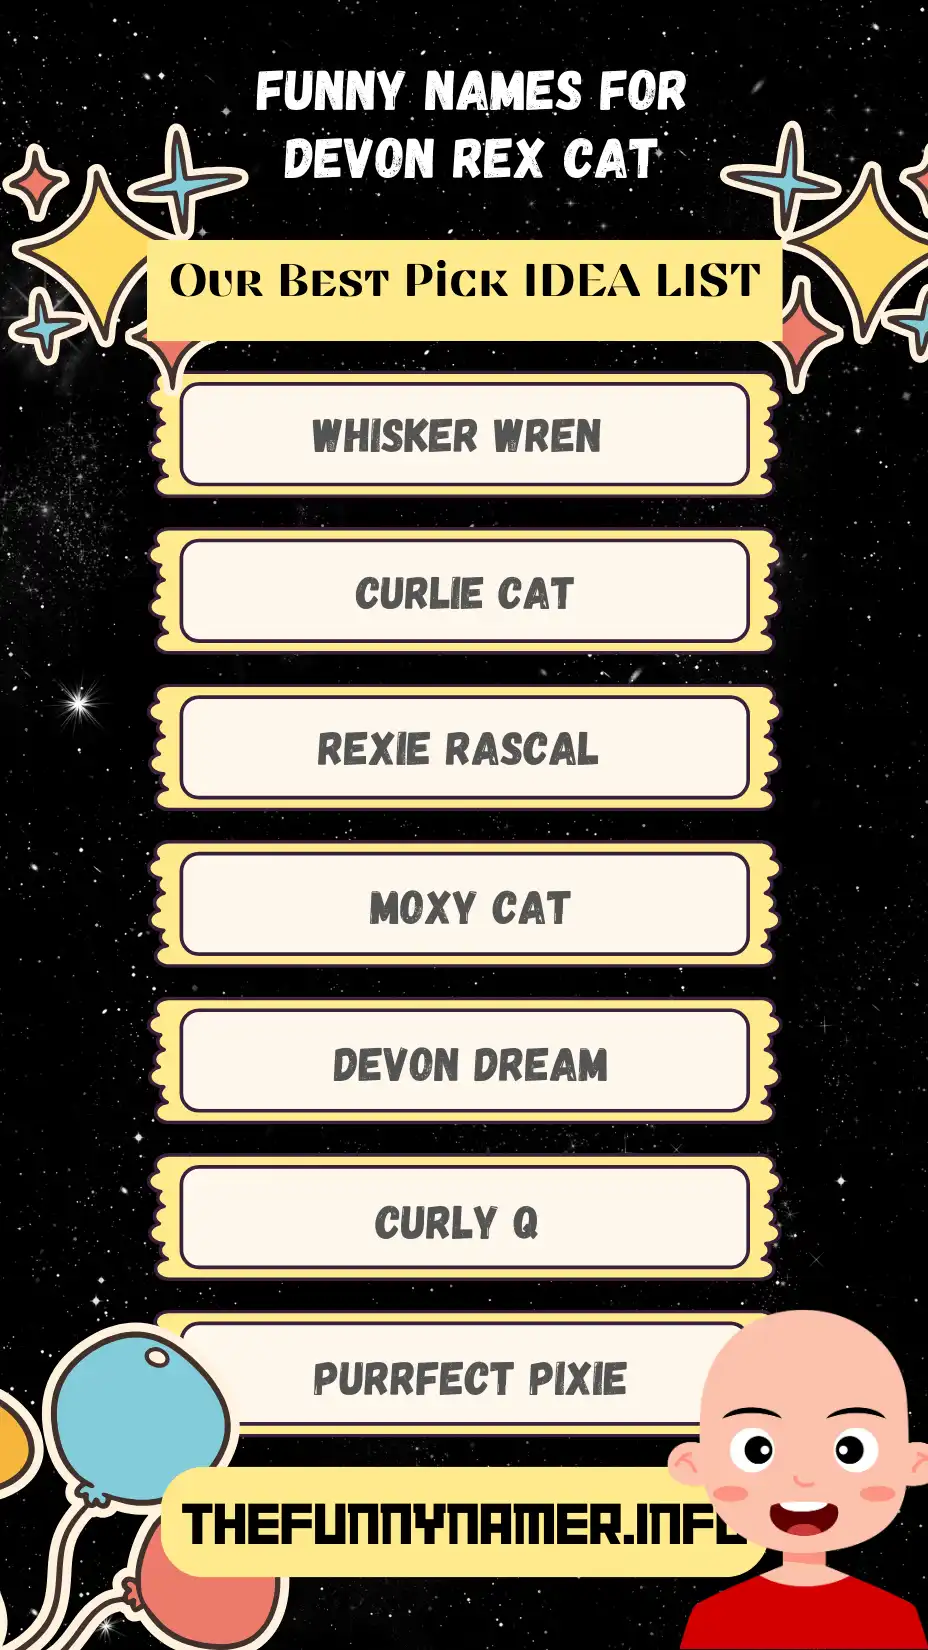 IDEA LIST FOR Devon Rex Cat